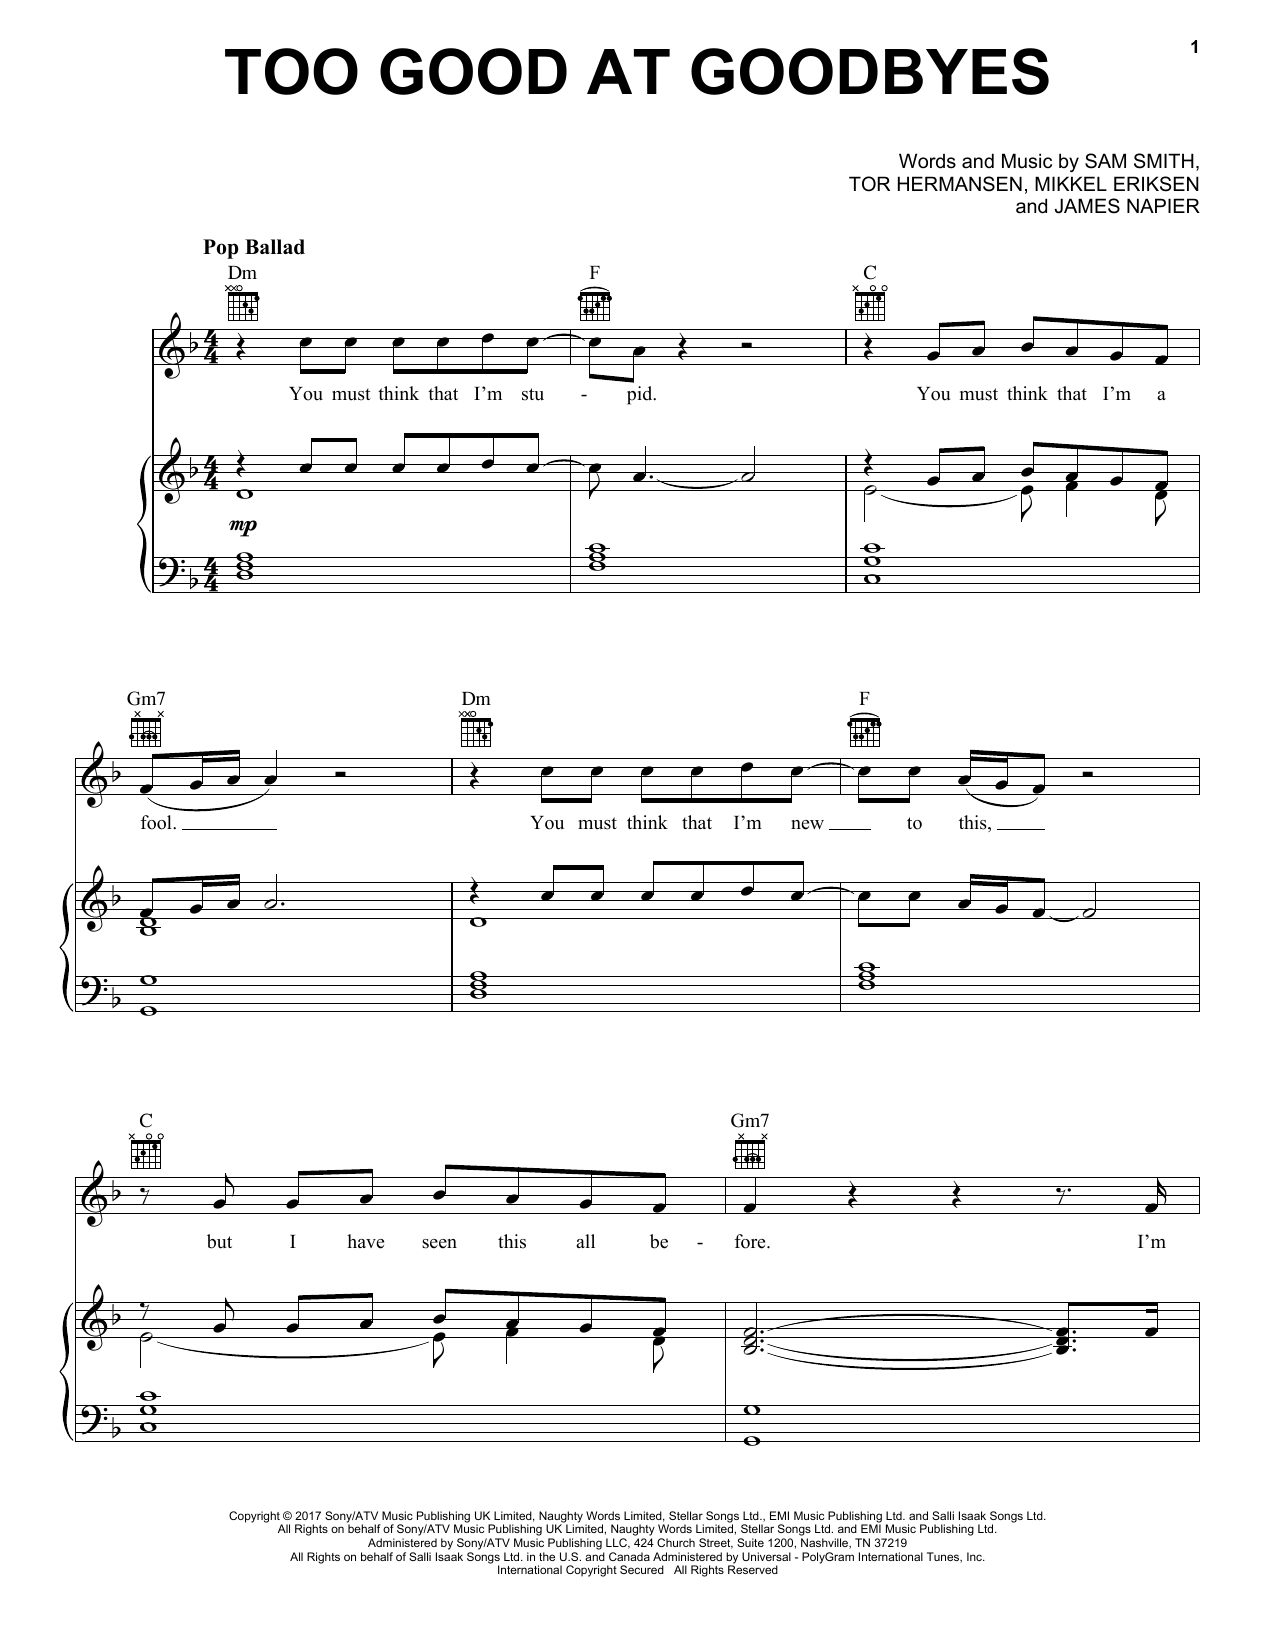 Sam Smith Too Good At Goodbyes Sheet Music Notes & Chords for Piano (Big Notes) - Download or Print PDF